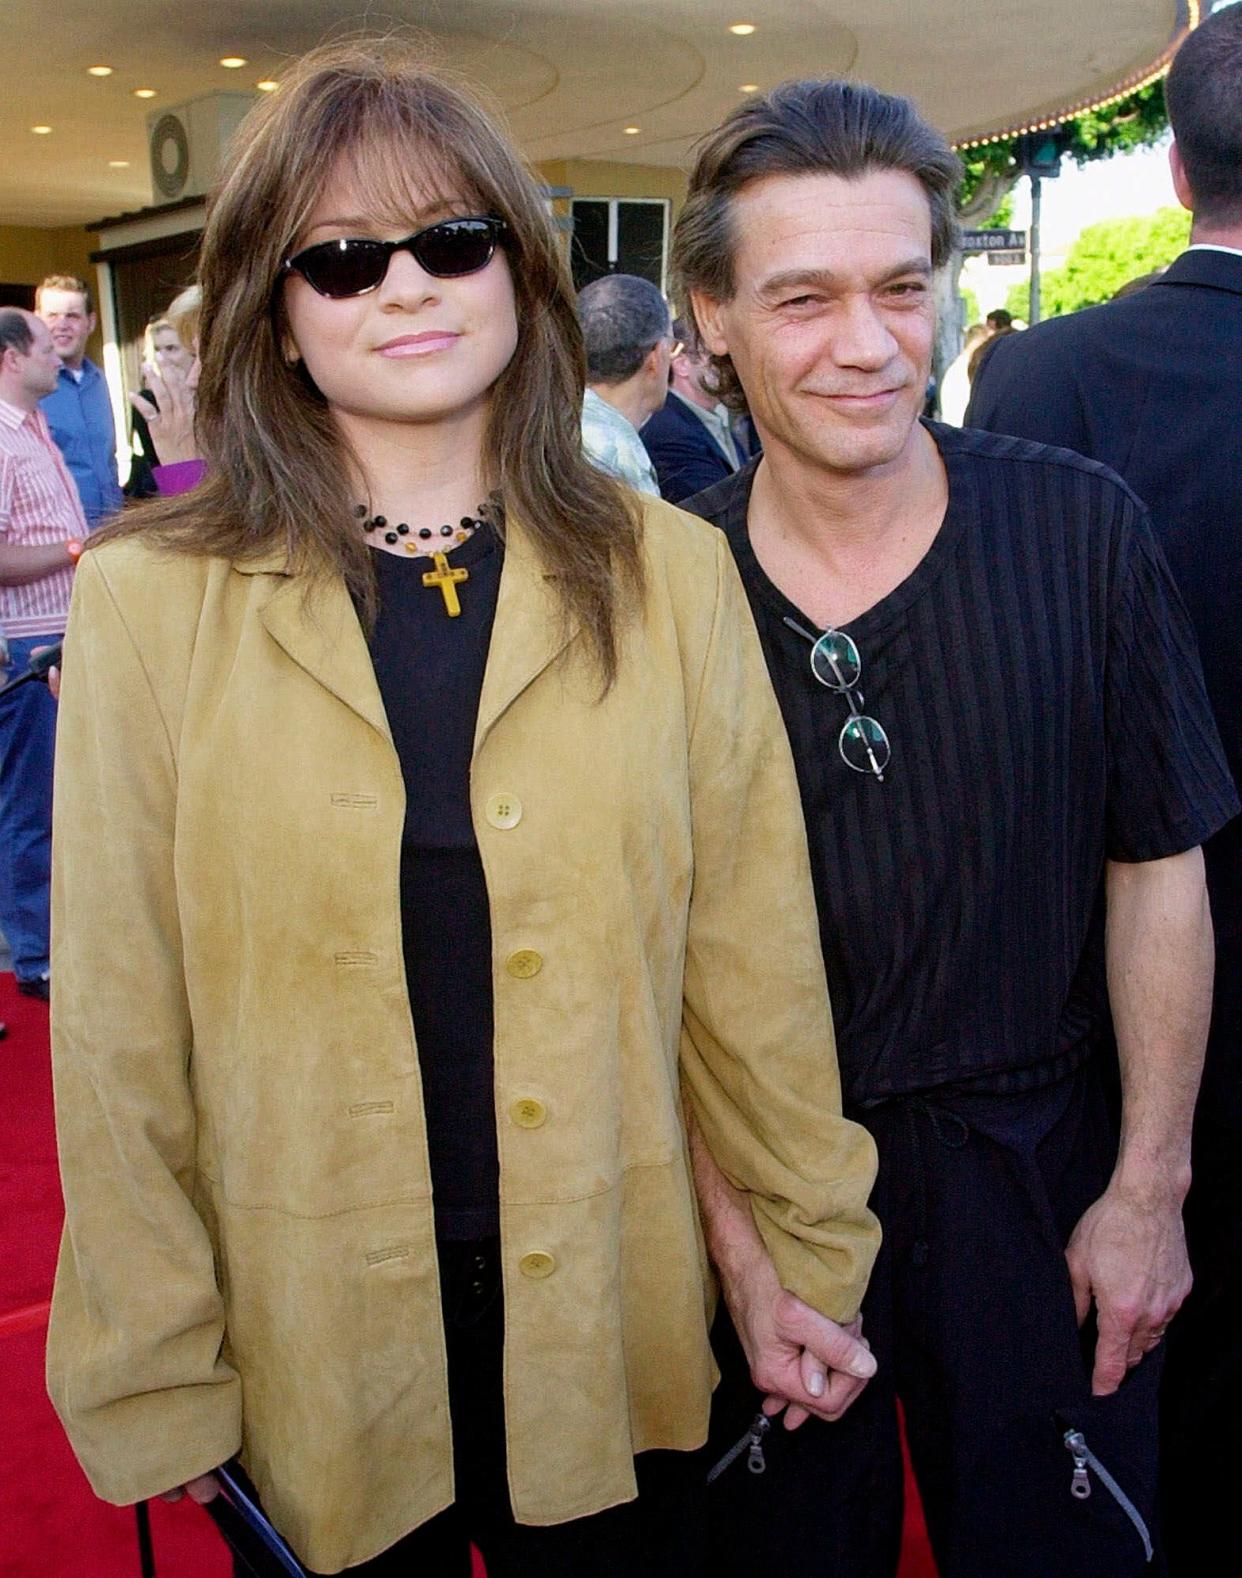 Valerie Bertinelli and Eddie Van Halen, photographed in Los Angeles in 2001, remained close despite divorcing in 2007.